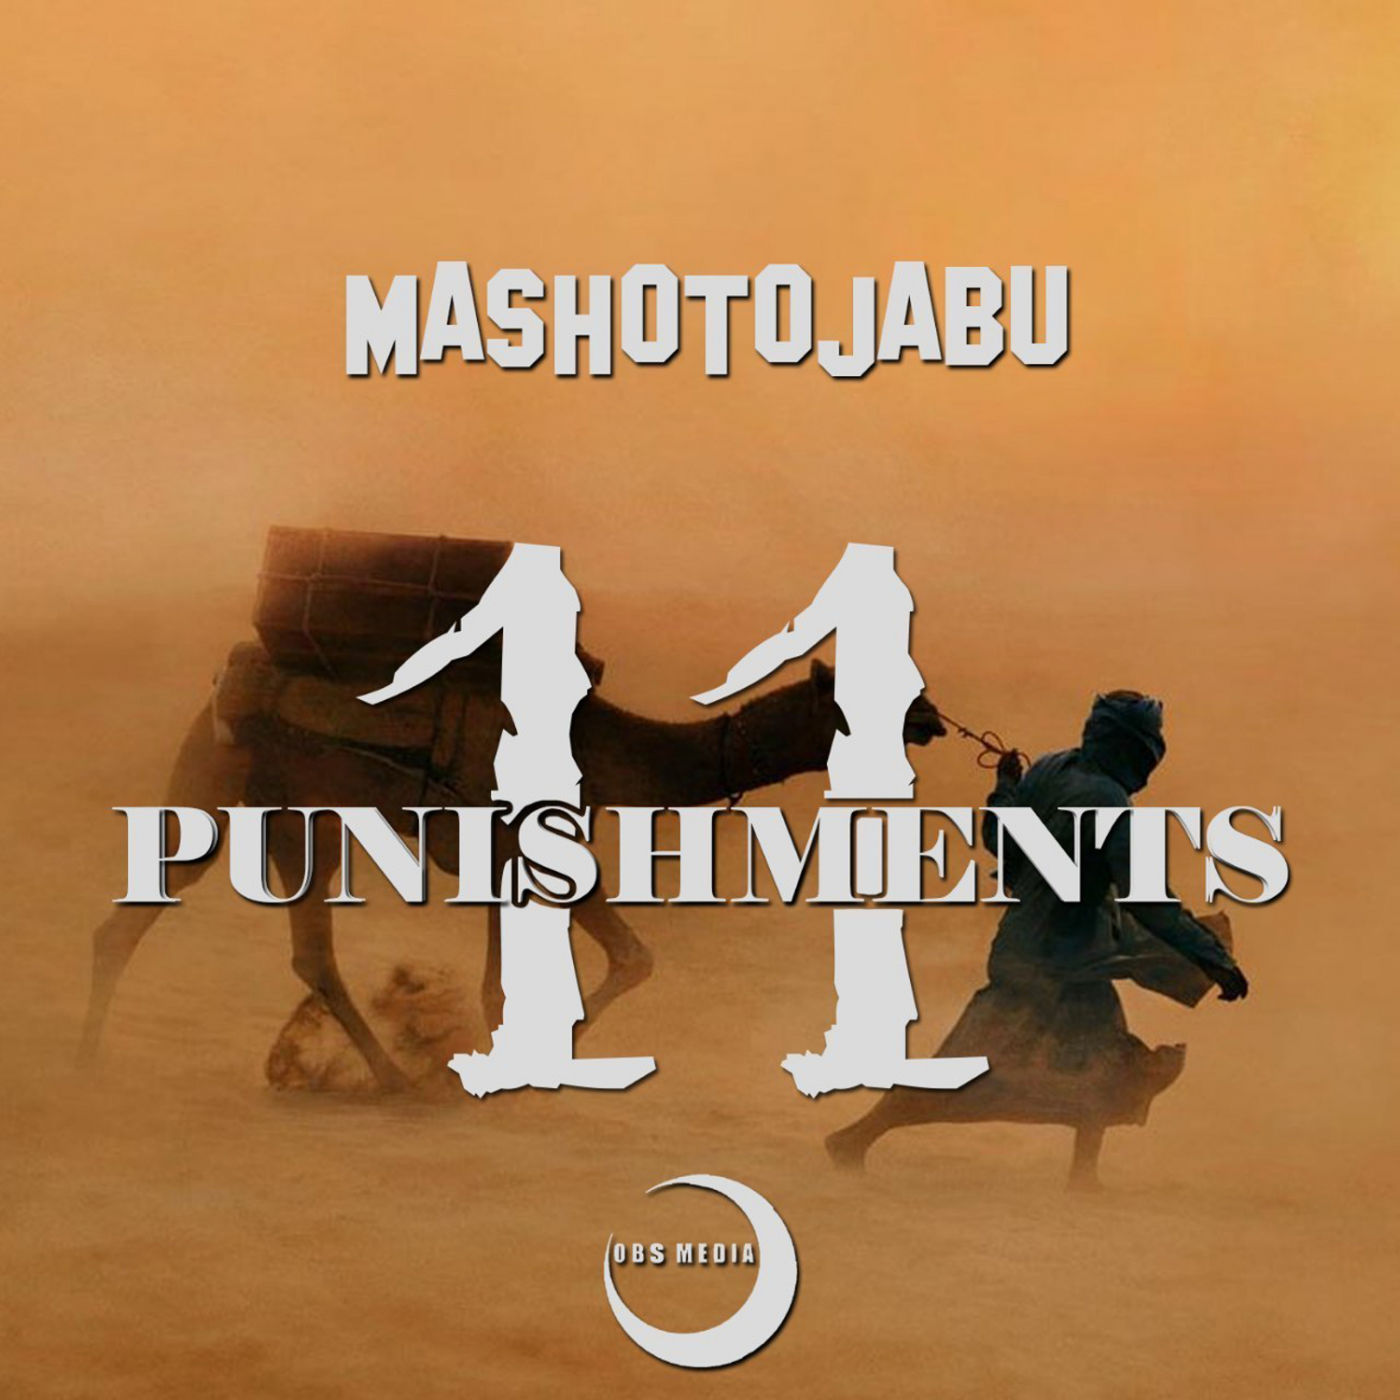 MashotoJabu - Punishments / OBS Media